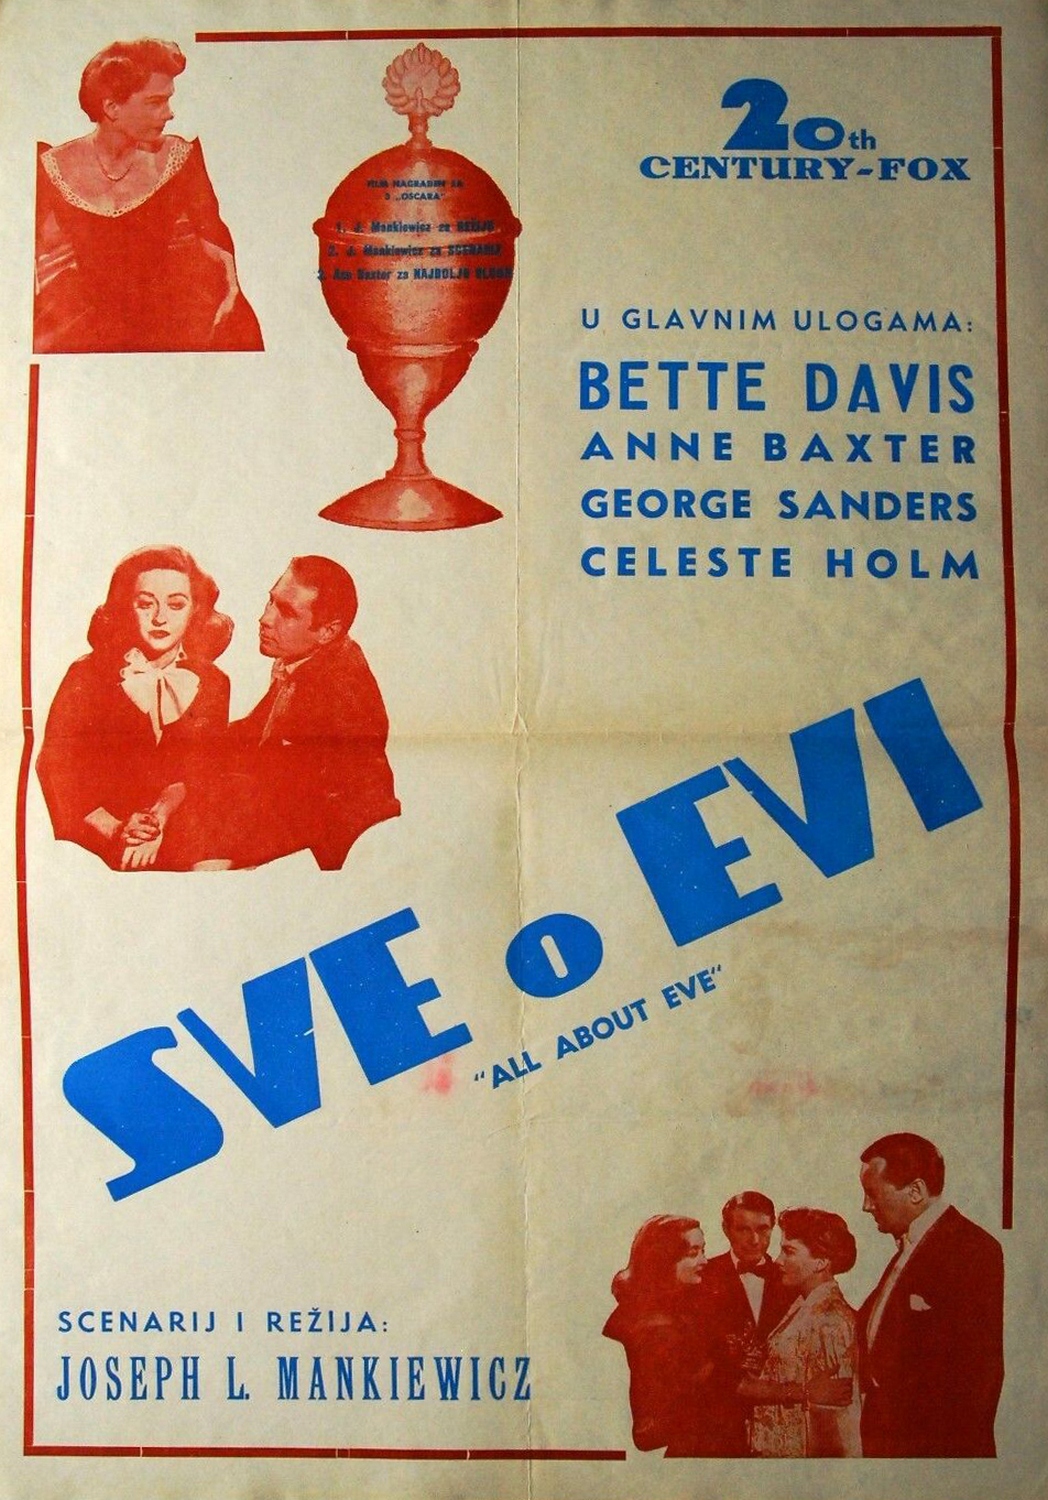 You are currently viewing Godišnjica premijere drame Sve o Evi Josepha L. Mankiewicza